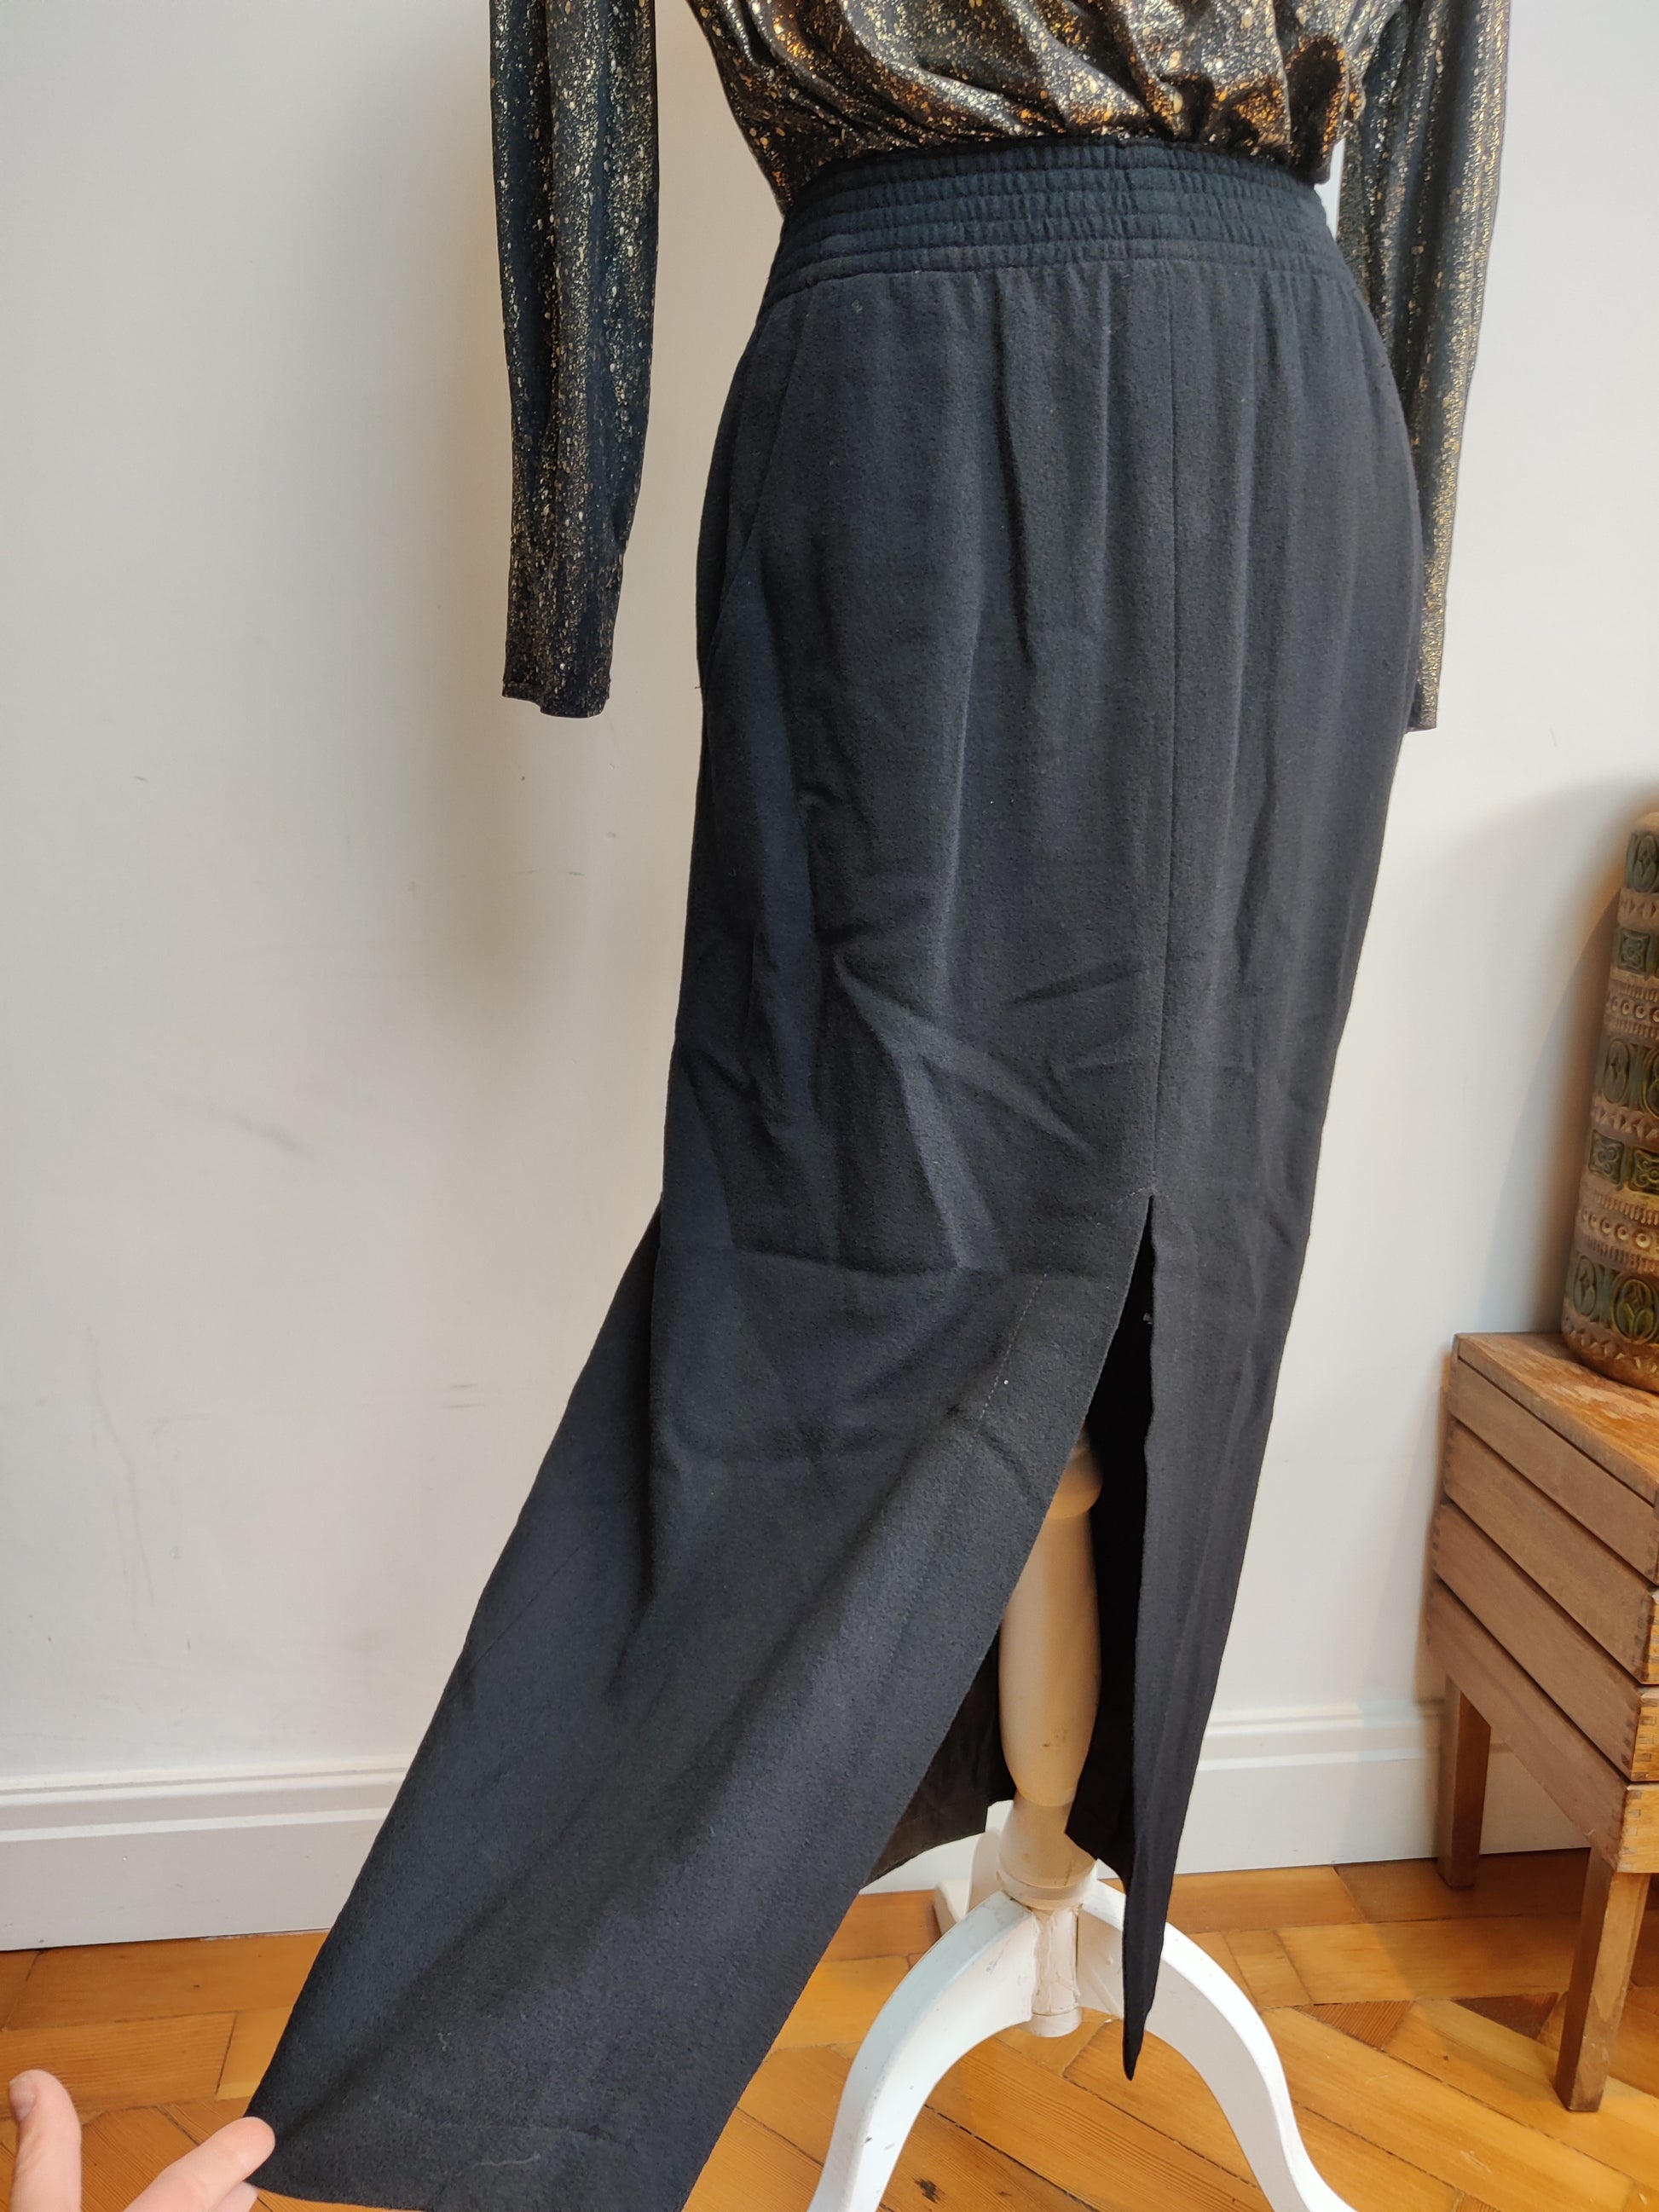 Black vintage Jean Muir skirt size 8-10.